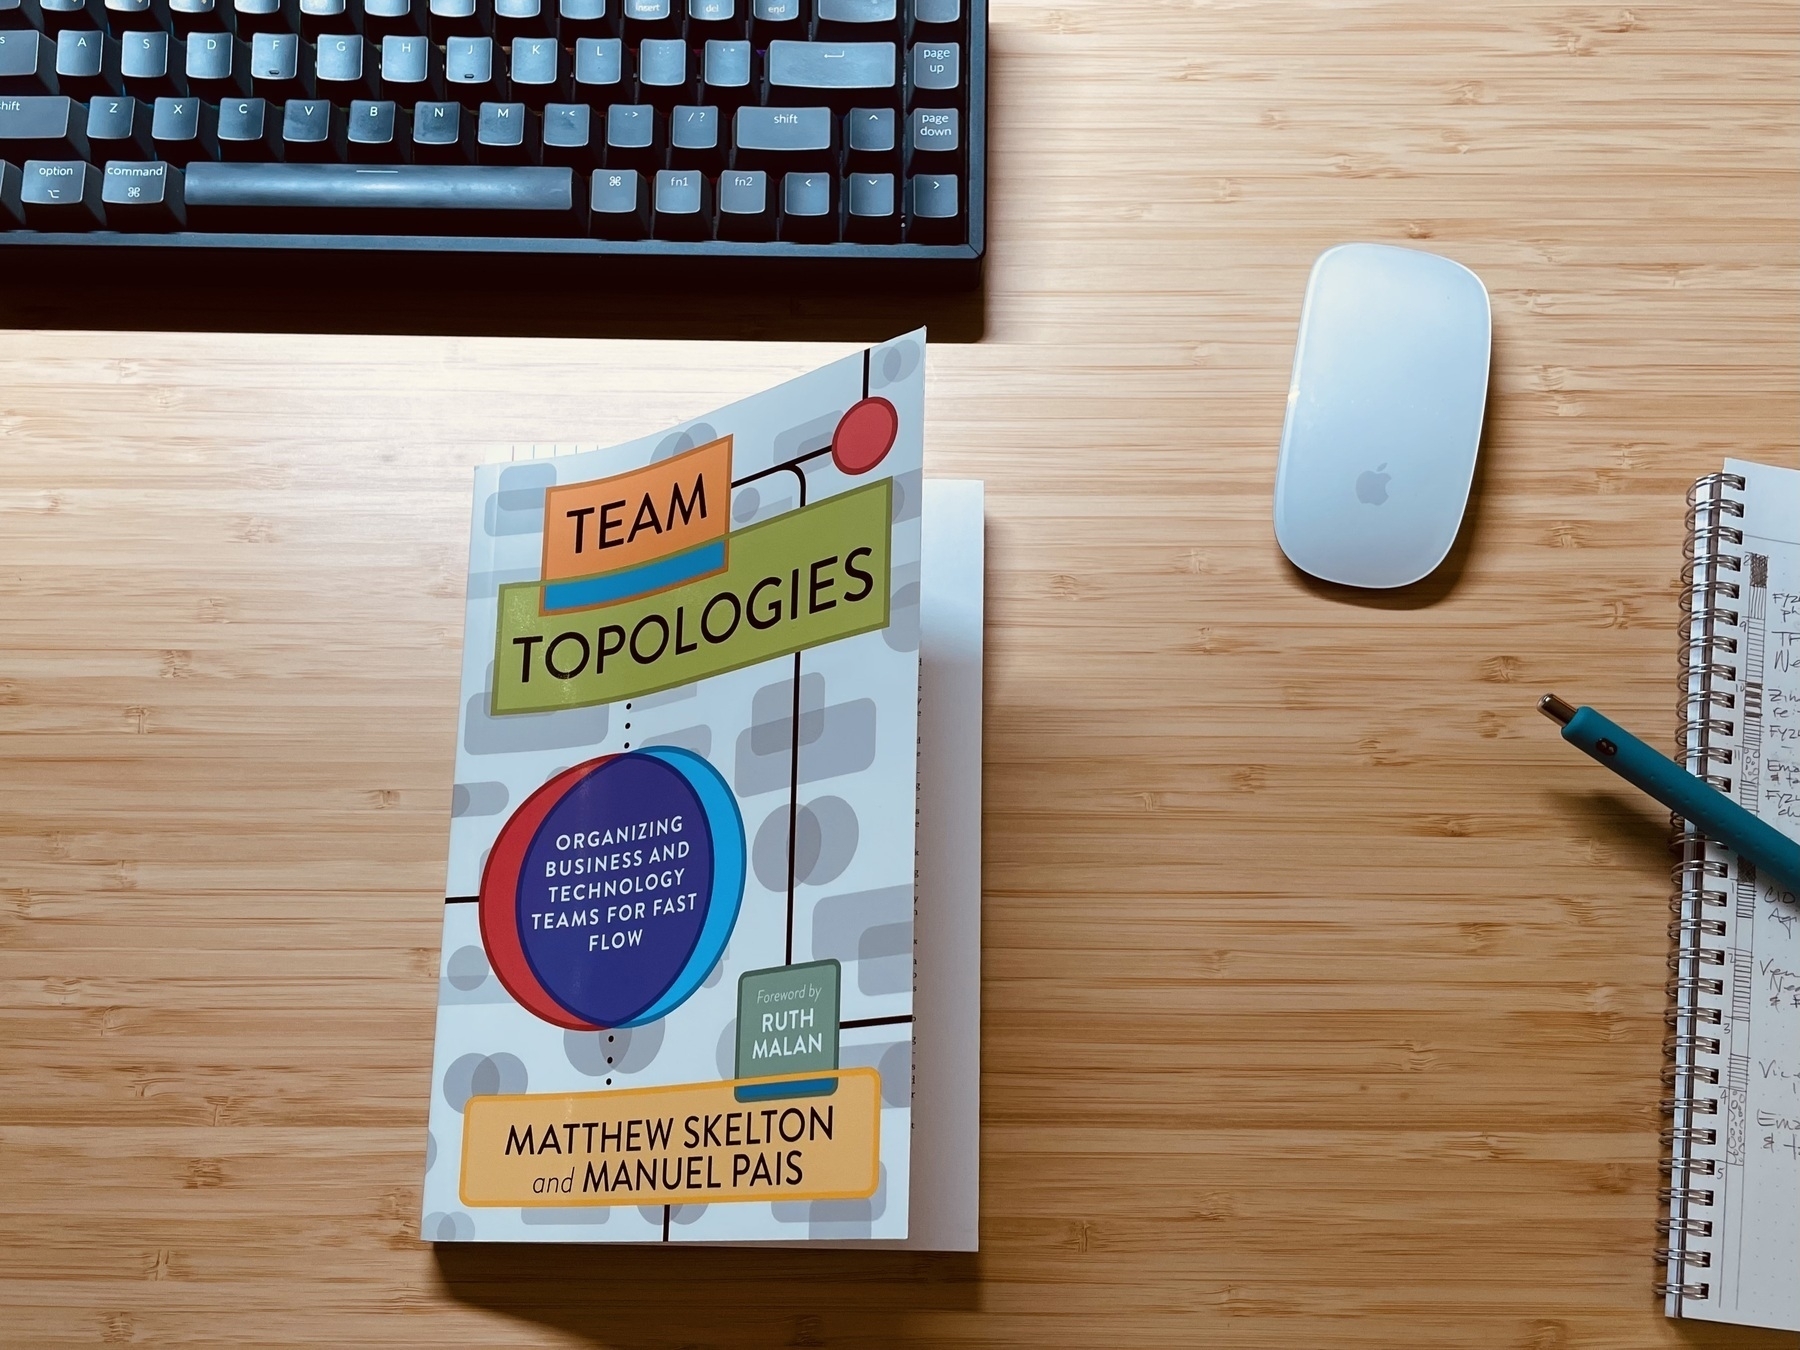 A copy of Matthew Skelton’s book Team Topologies on my desk